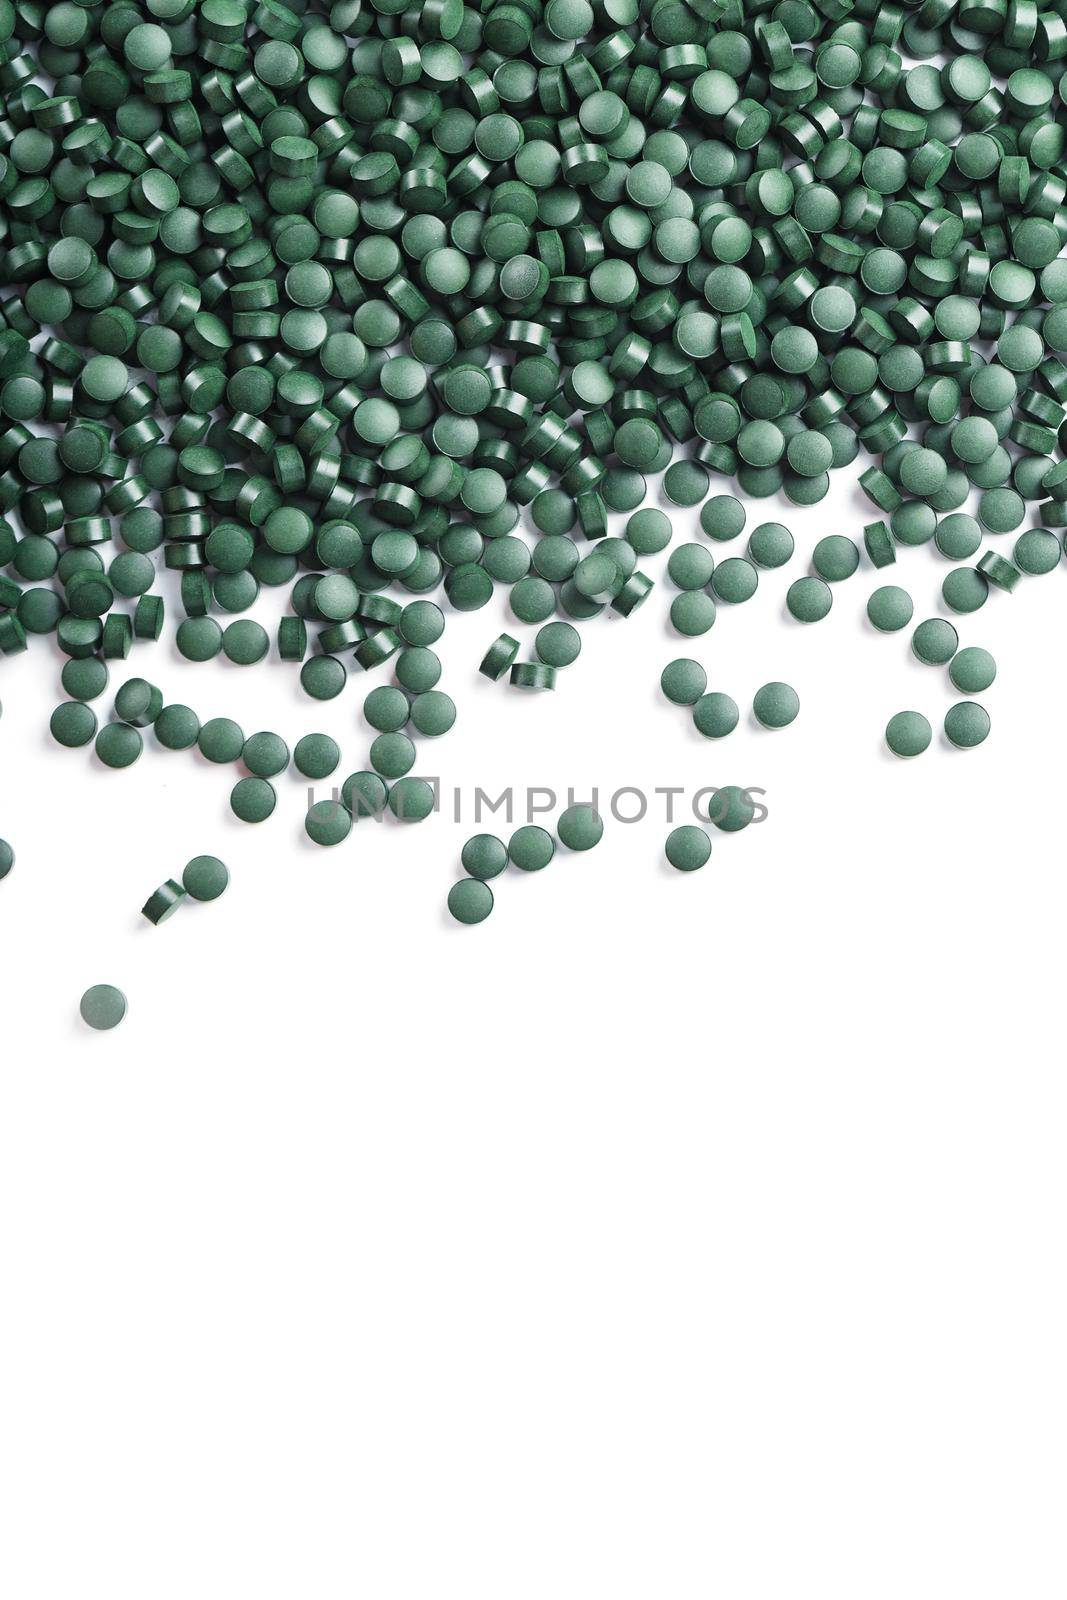 Green tablets made of natural organic spirulina by AlexGrec